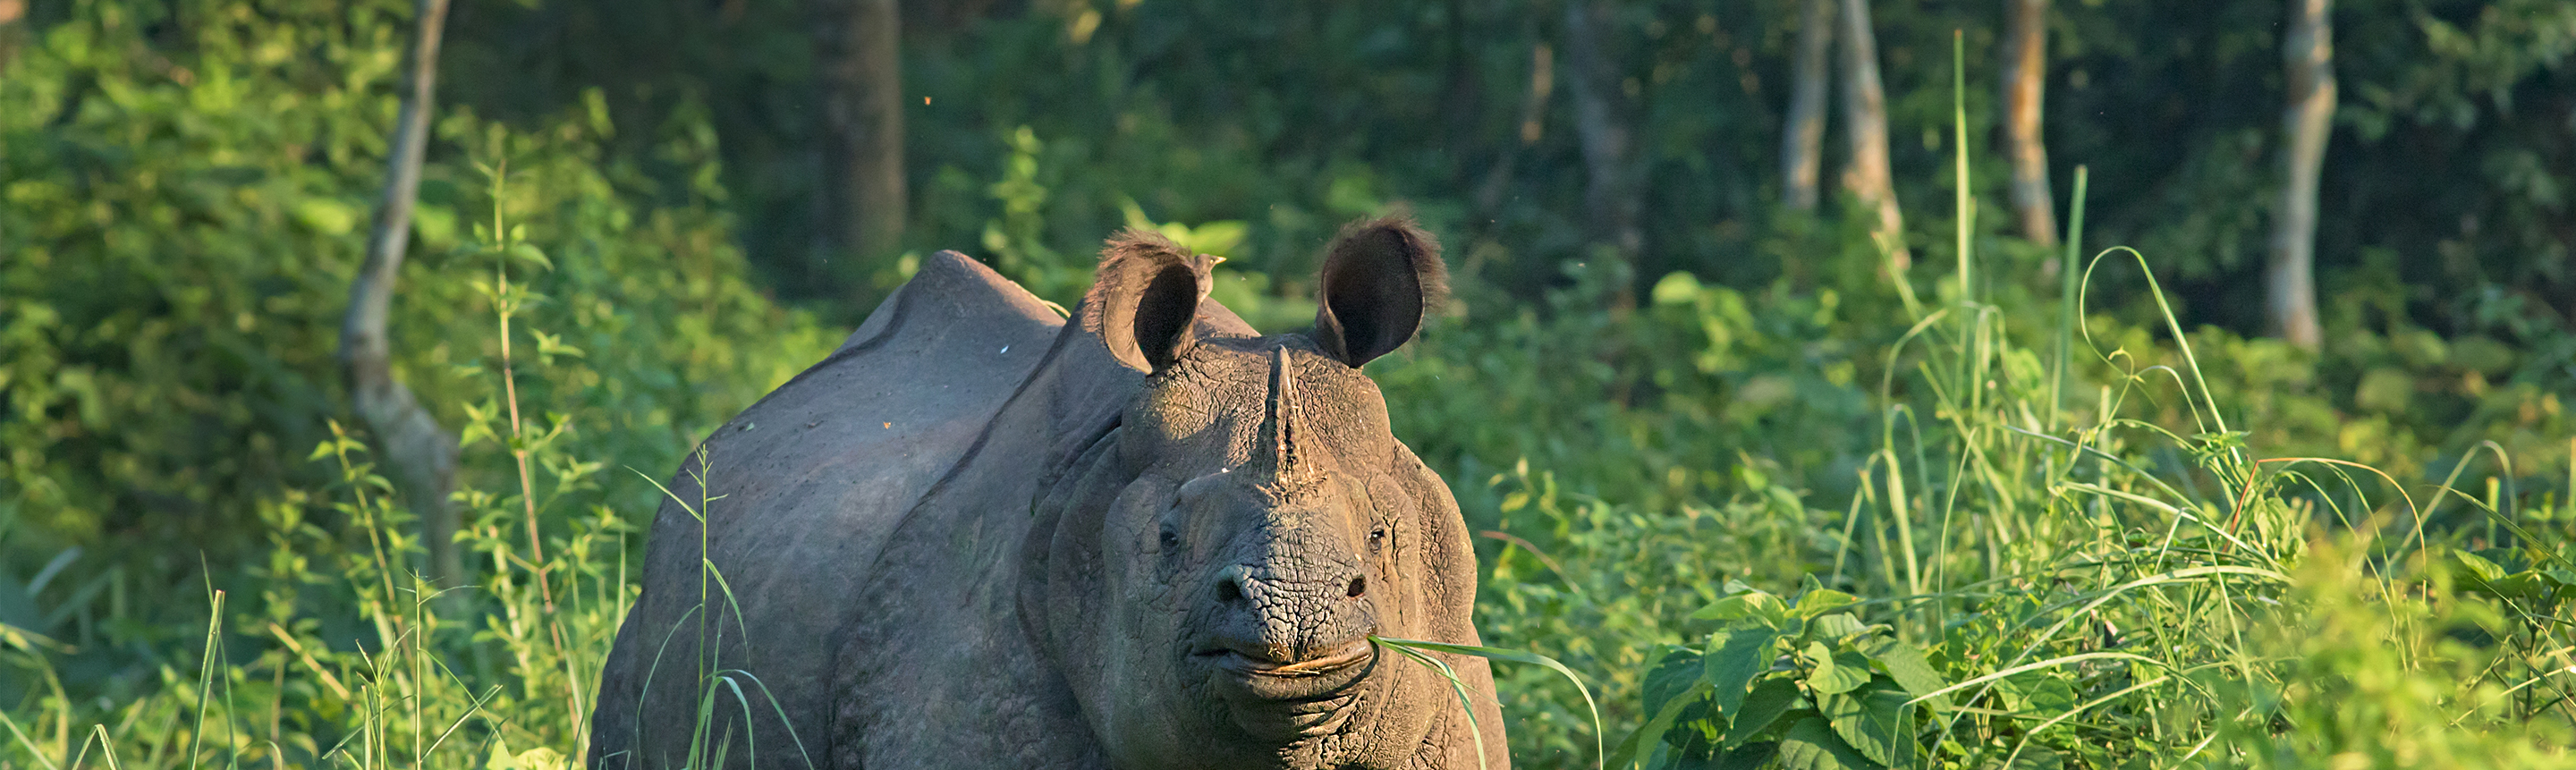 Beyond's rhino rescue efforts rewarded: Travel Weekly Asia